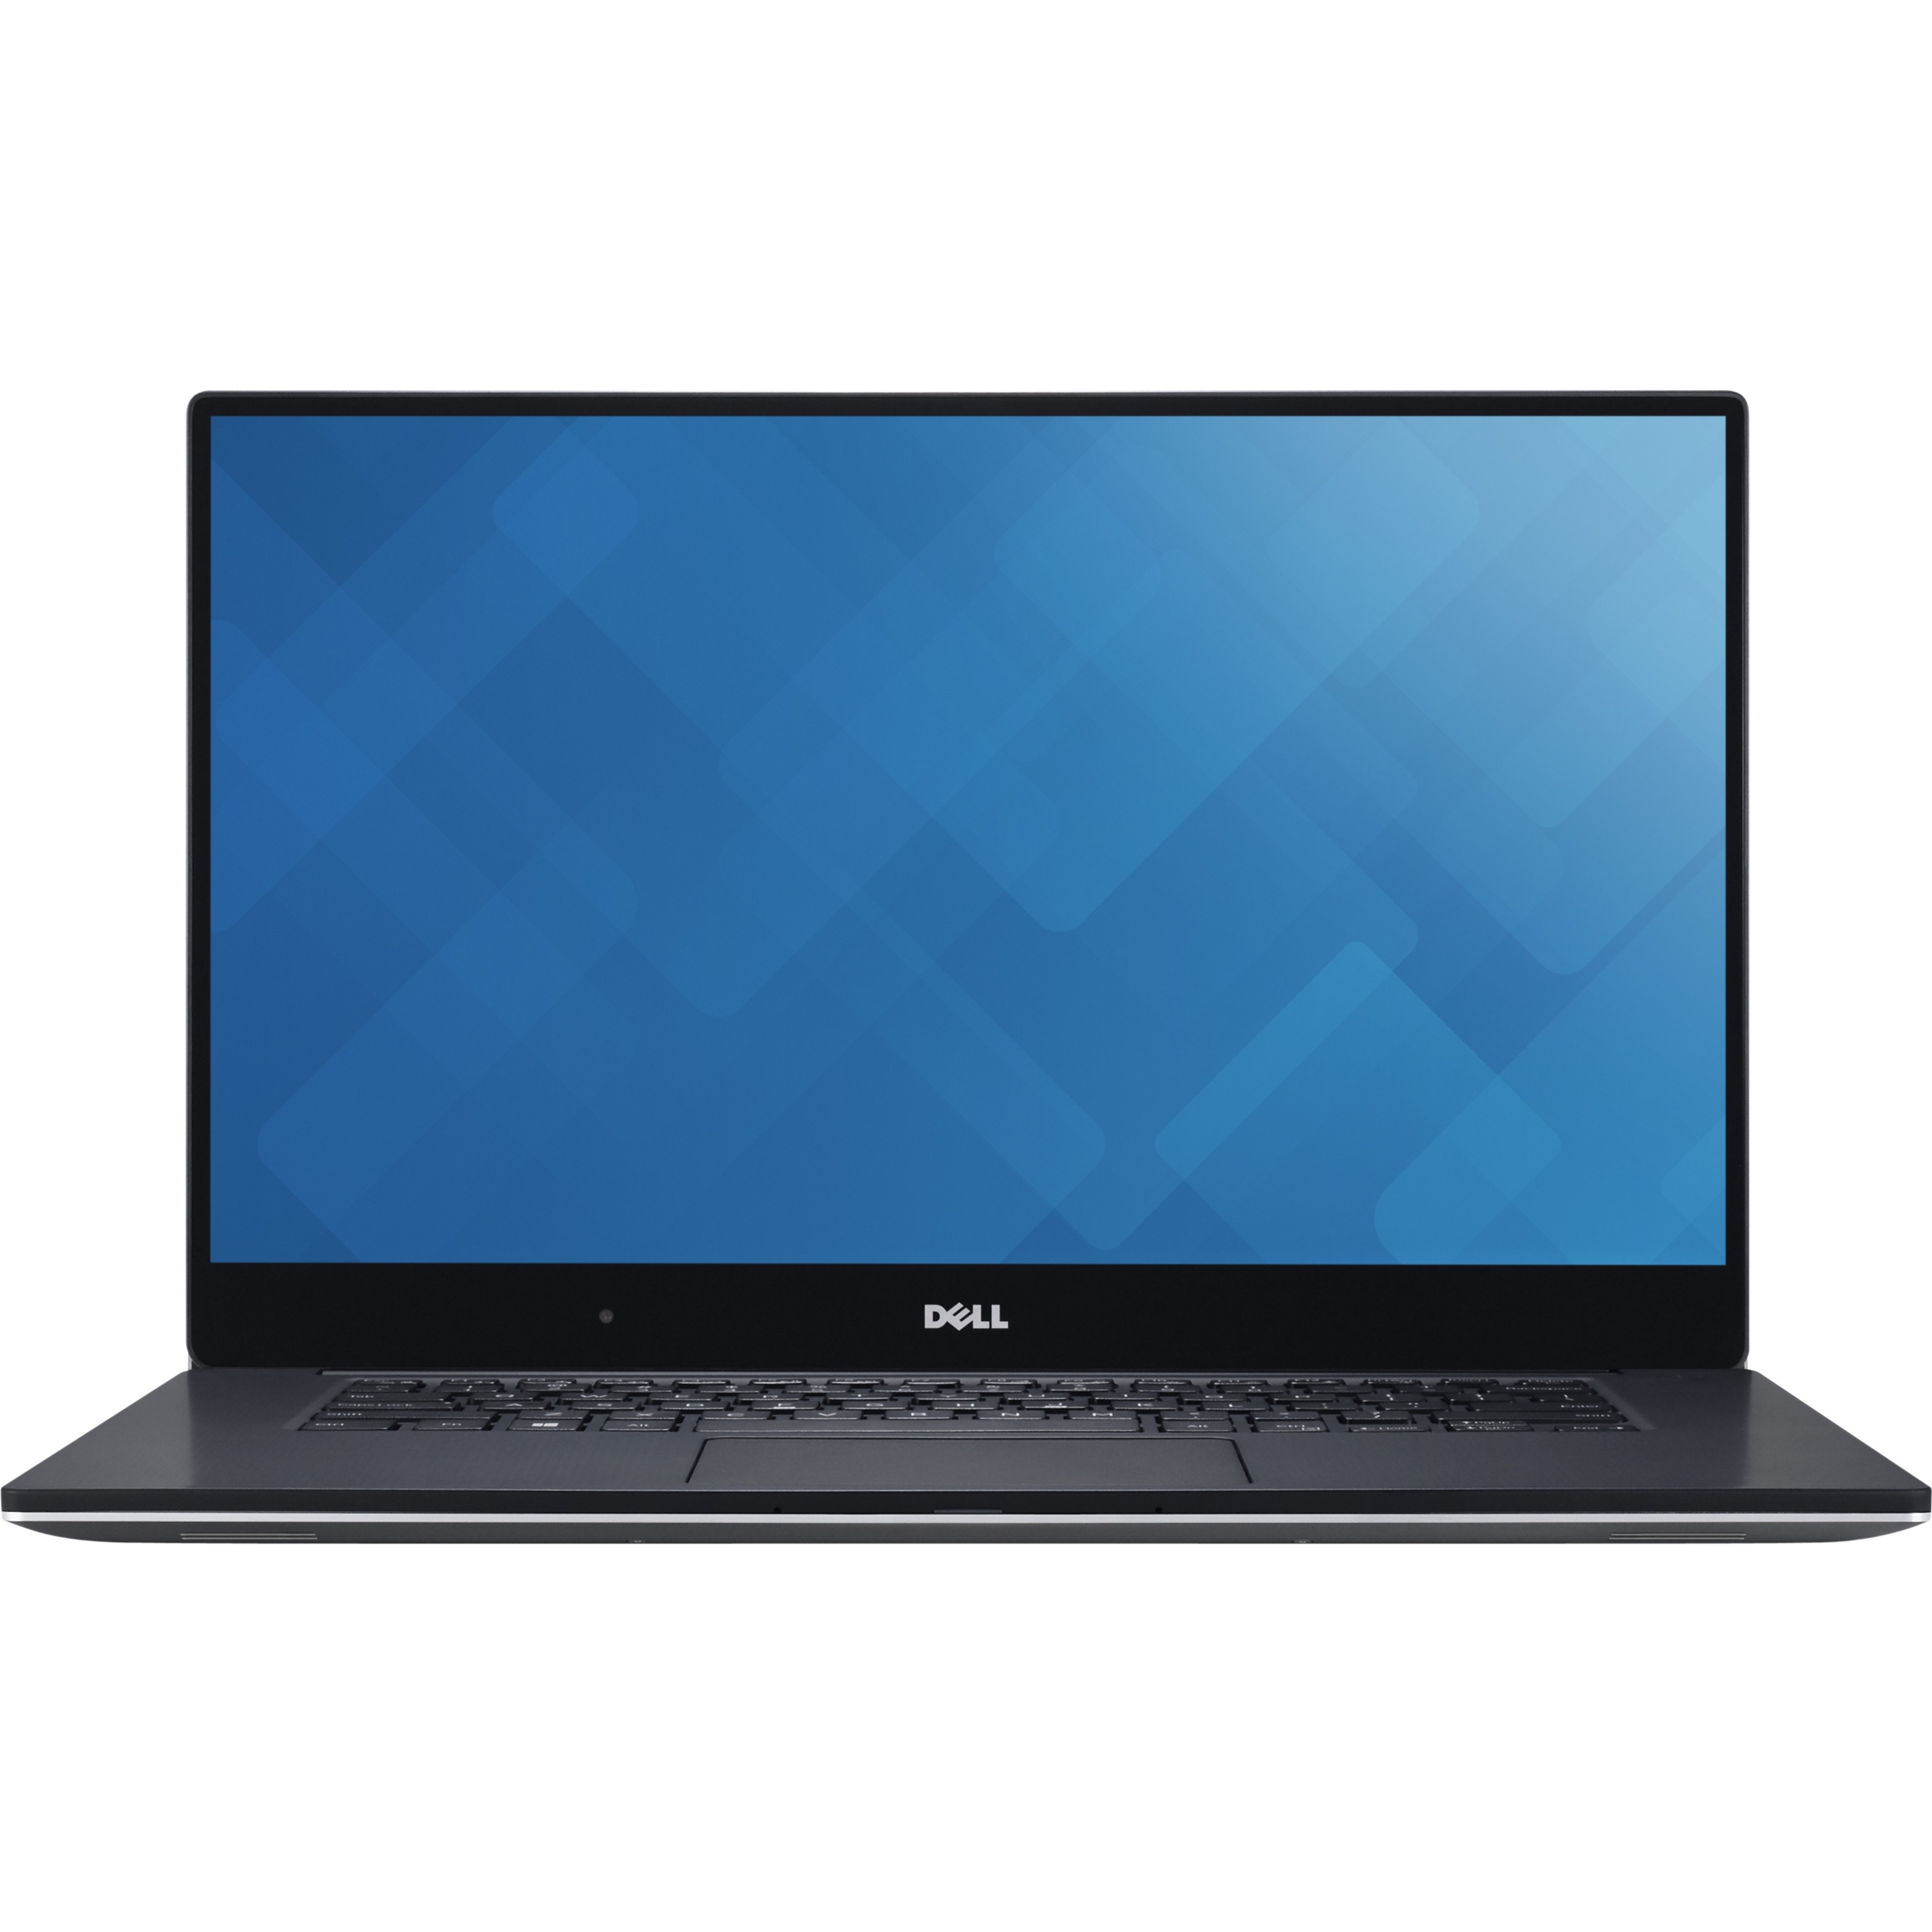 Dell XPS 15.6" 4K UHD Touchscreen Laptop, Intel Core i7 i7-6700HQ, 16GB RAM, 1TB SSD, Windows 10 Home, Aluminum Silver, 15-9550 - image 3 of 7